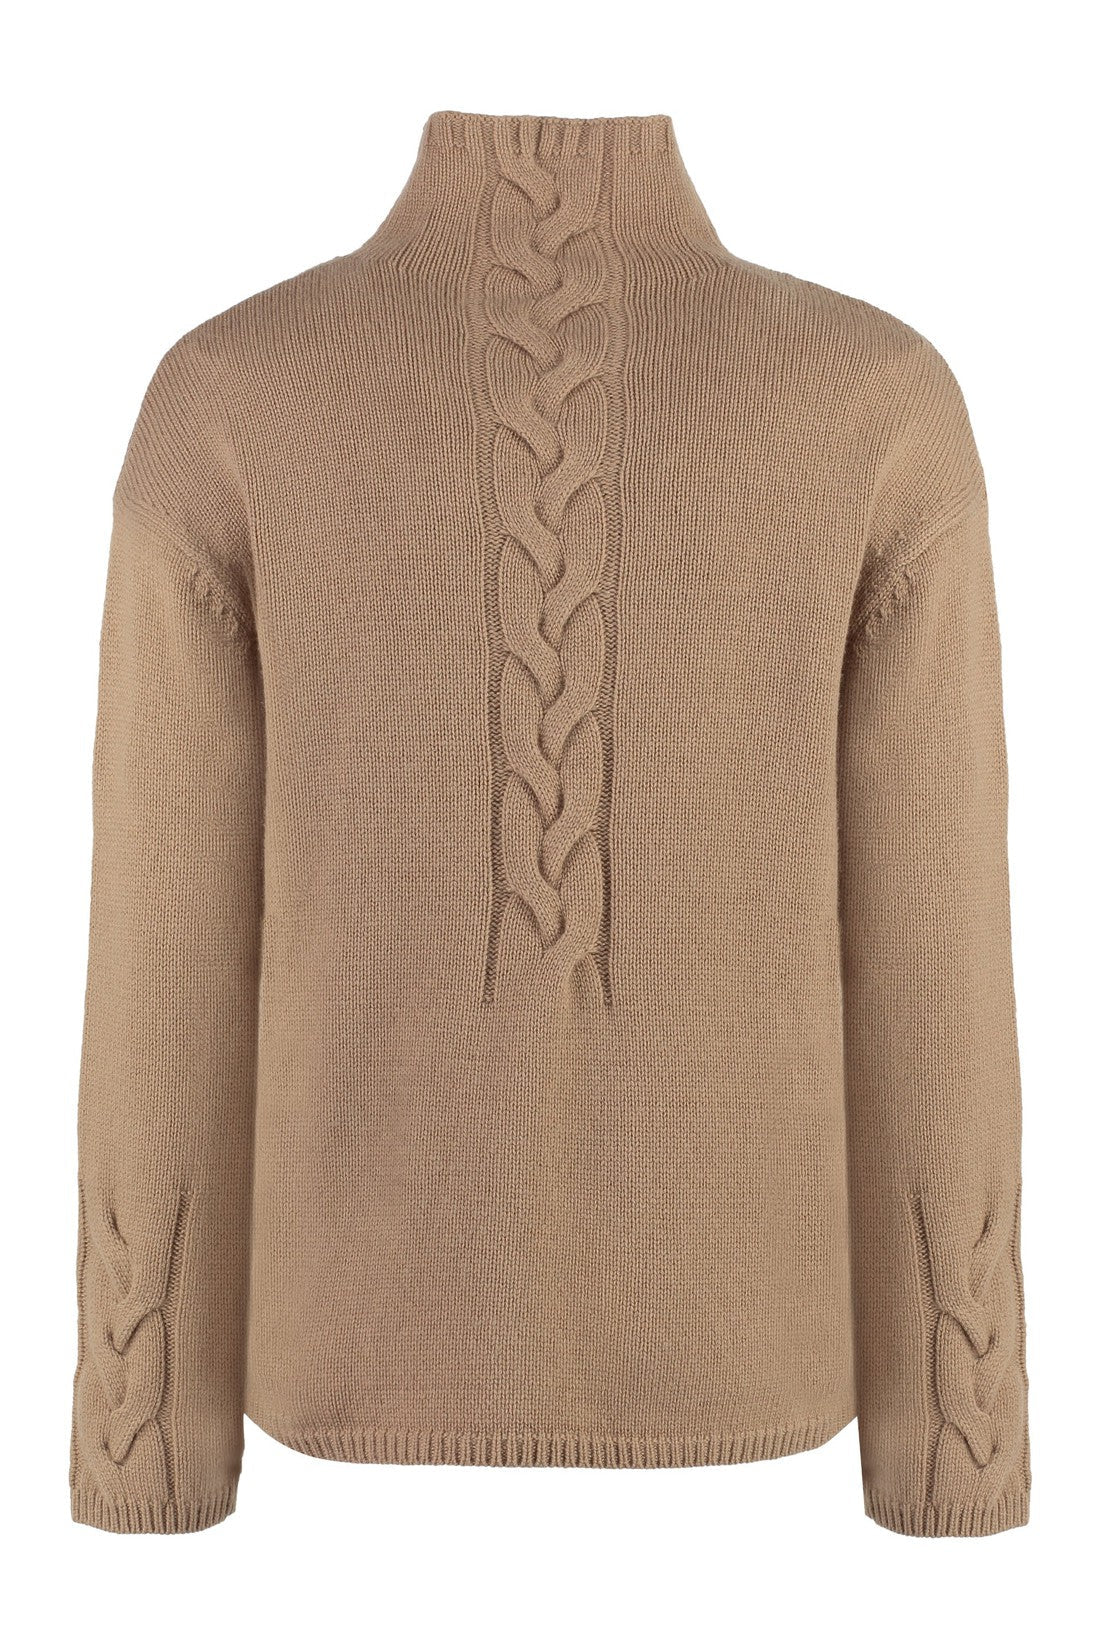 S MAX MARA-OUTLET-SALE-Wool blend turtleneck sweater-ARCHIVIST